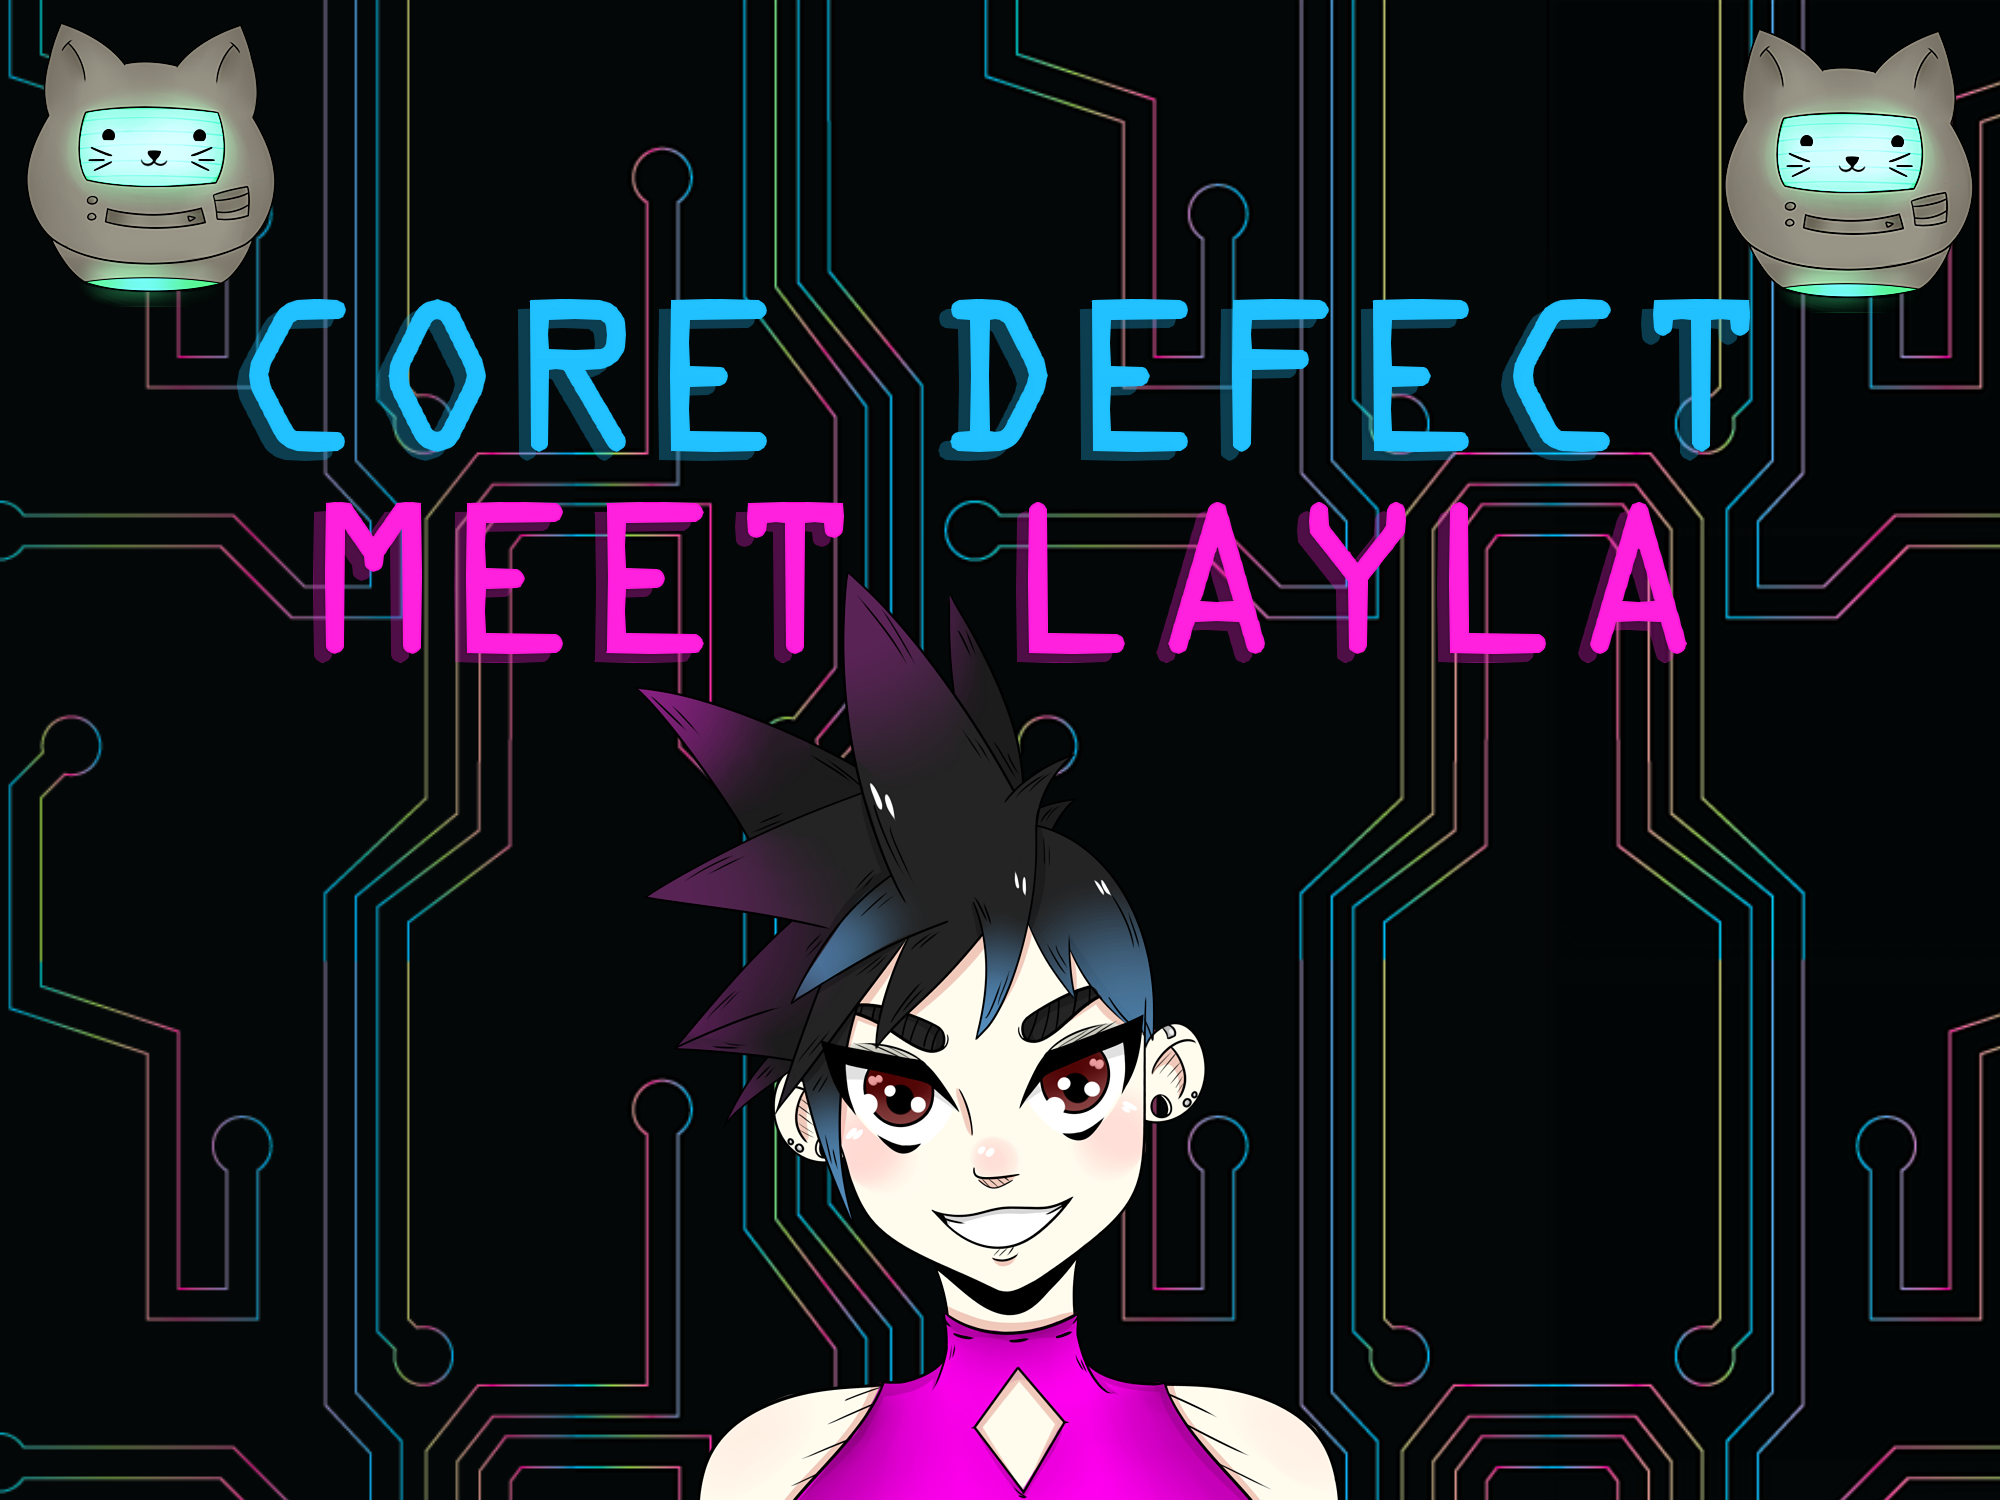 Core Defect: Meet Layla